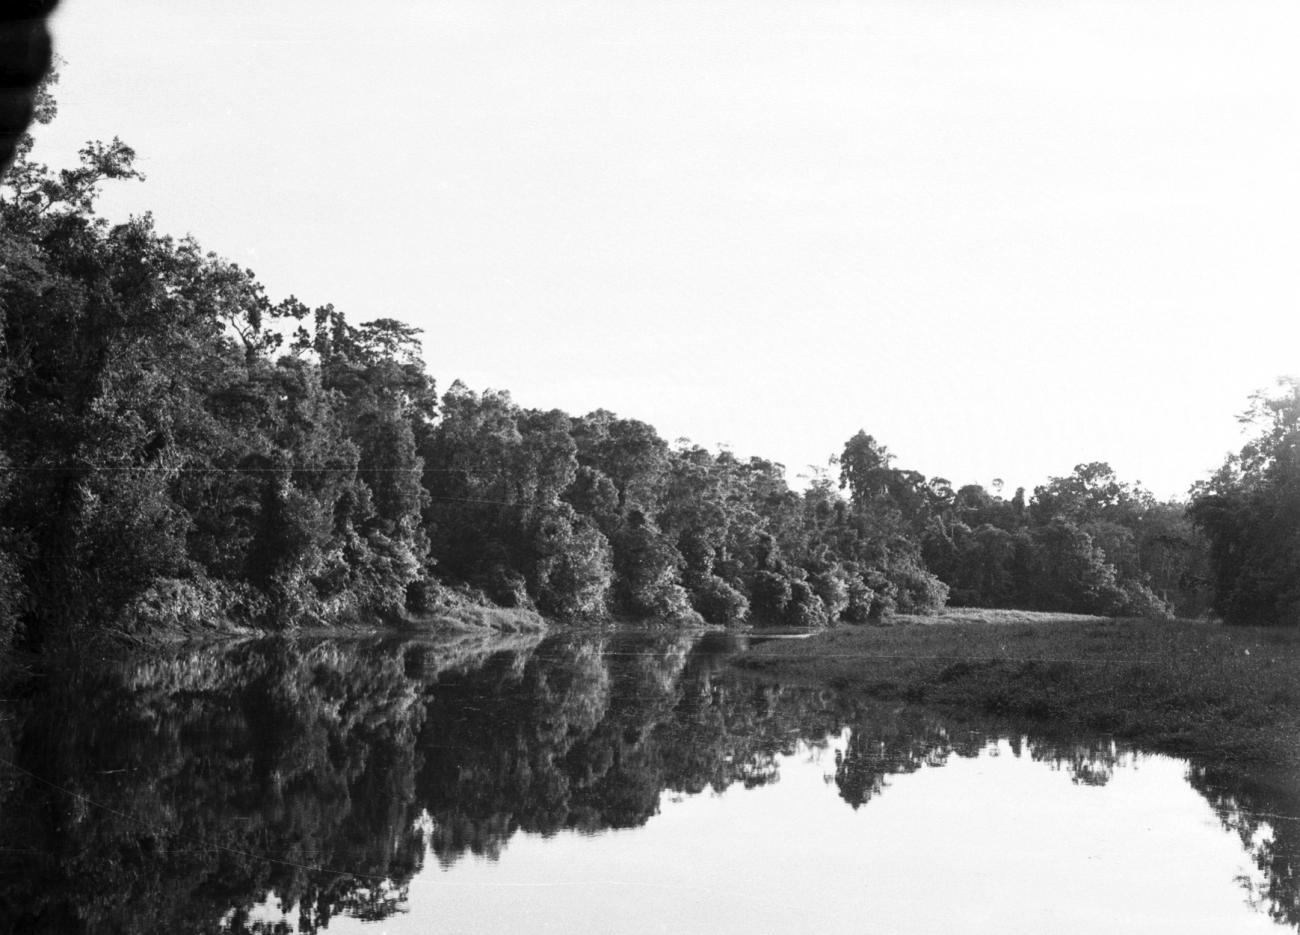 BD/133/857 - 
Landschapsfoto met rivier en oerwoud
